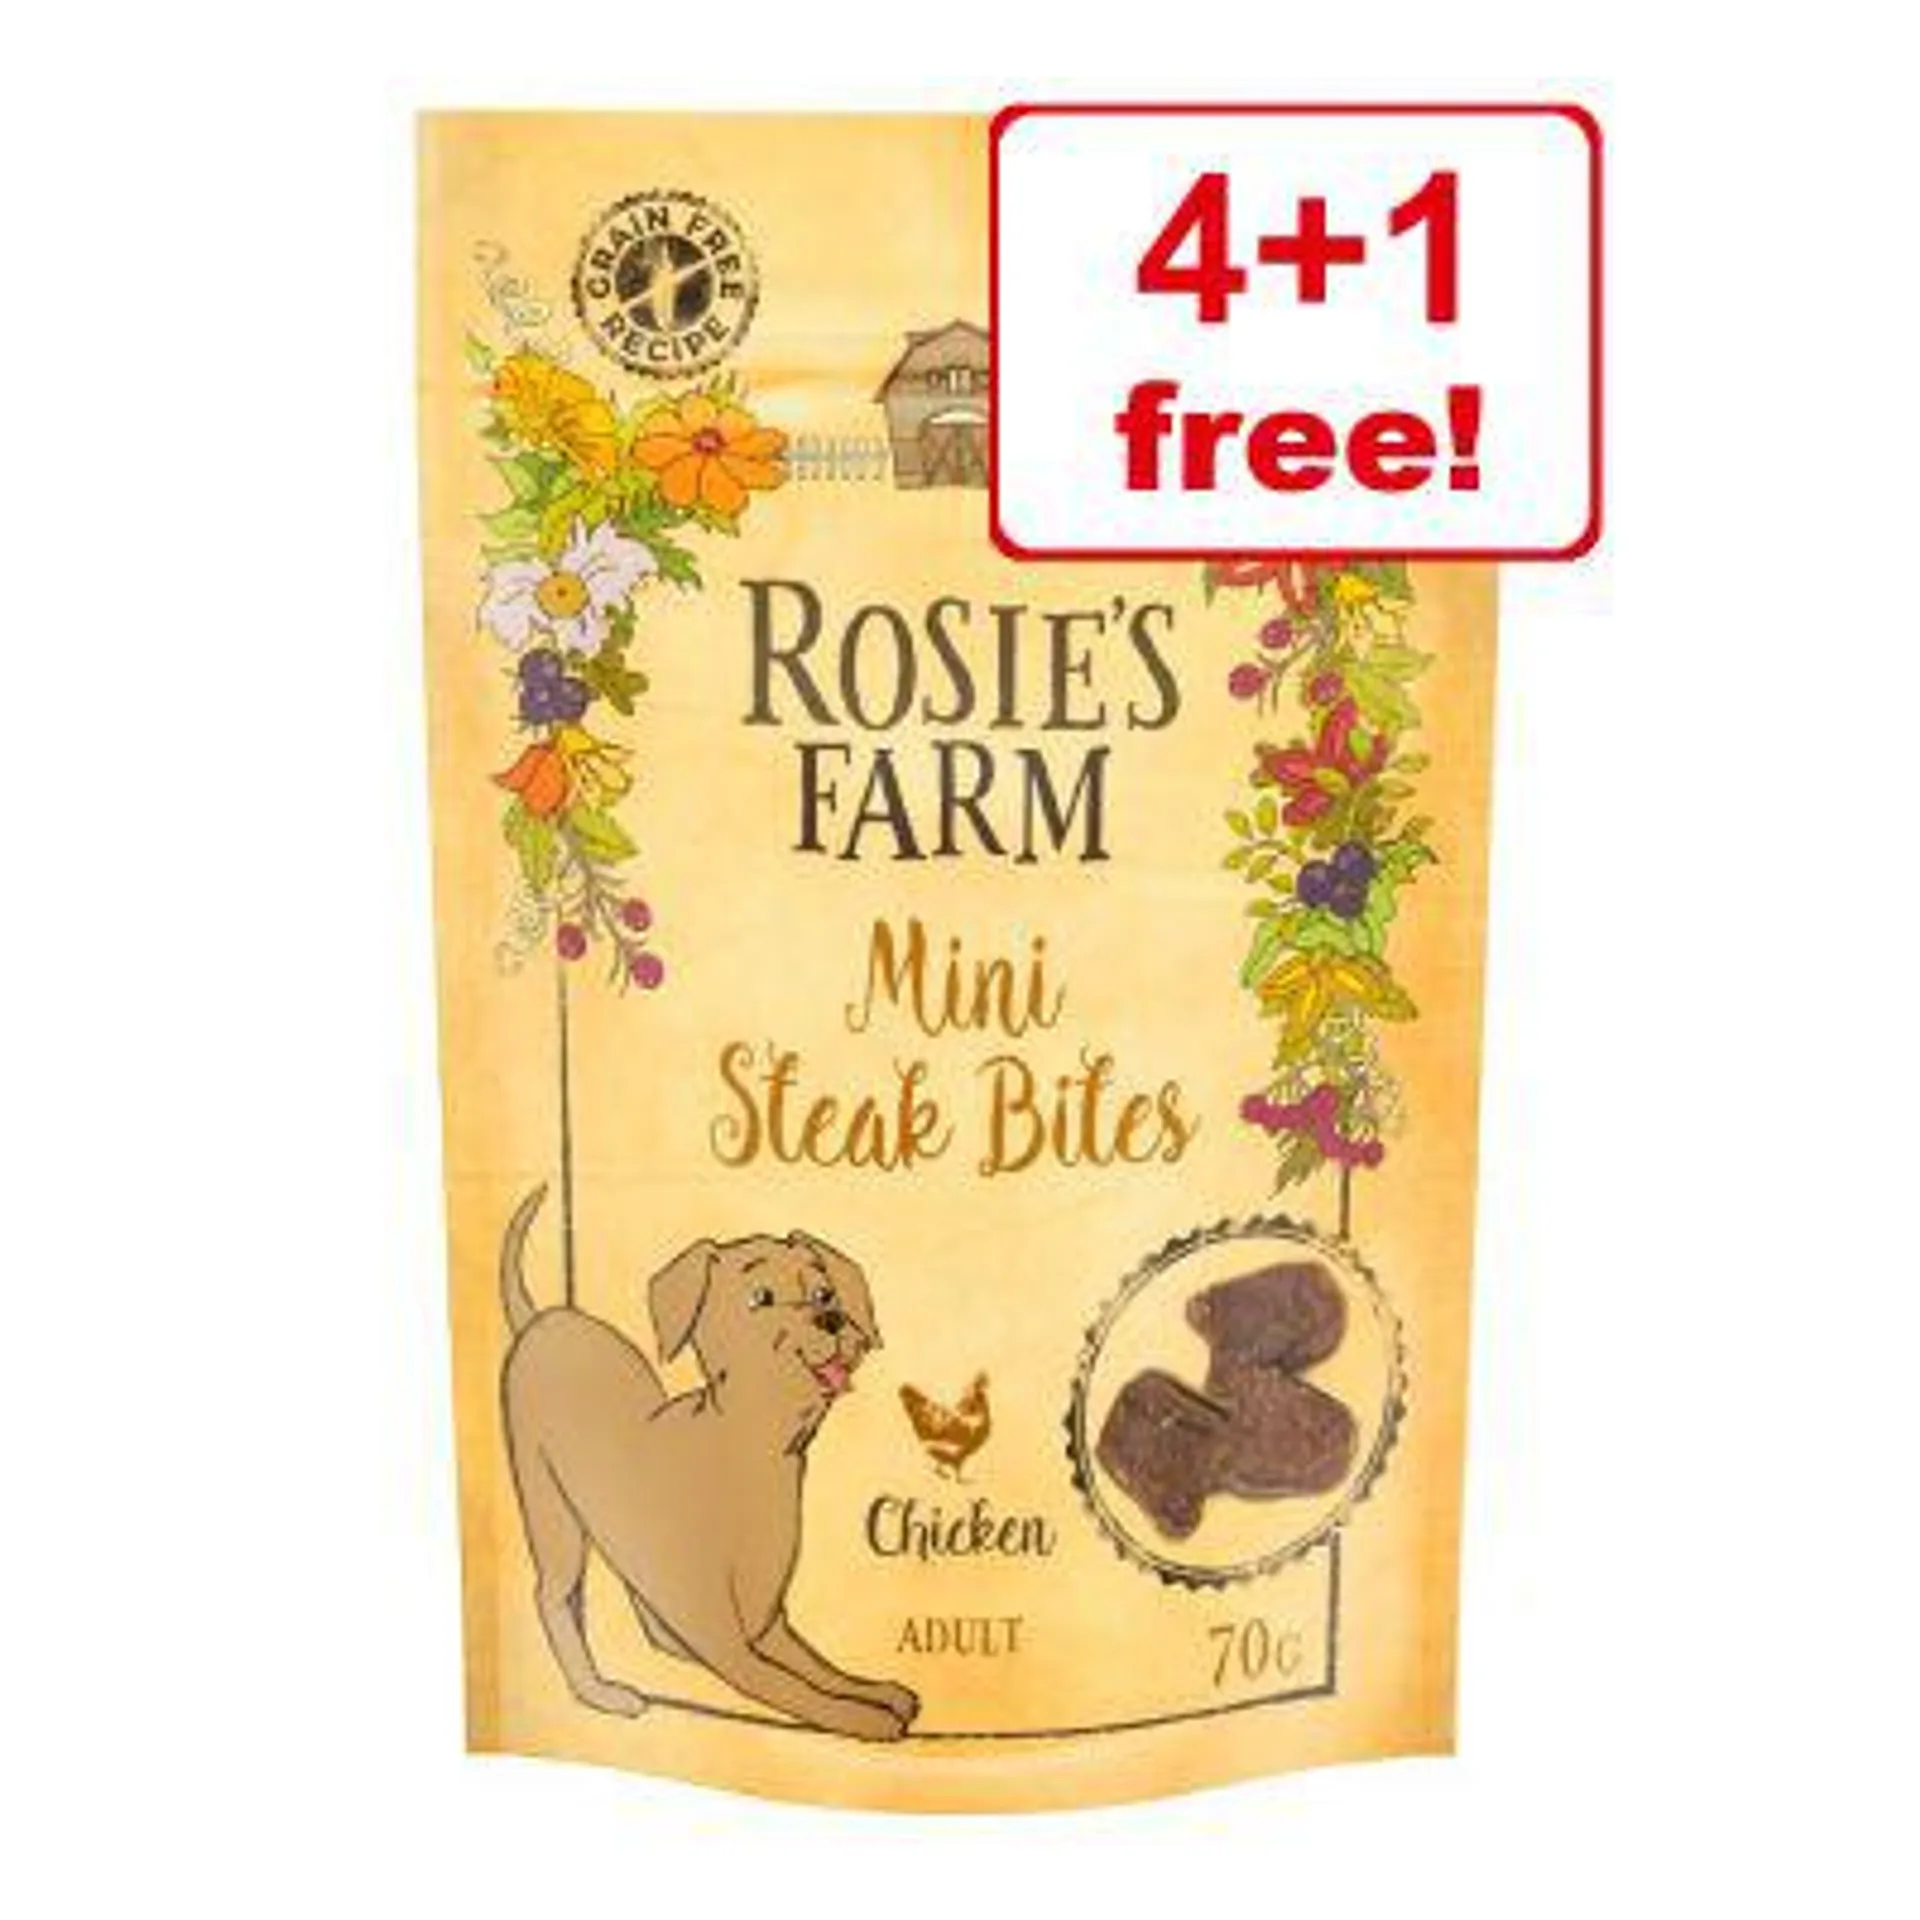 5 x 50g/70g Rosie's Farm Dog Treats - 4 + 1 Free!*